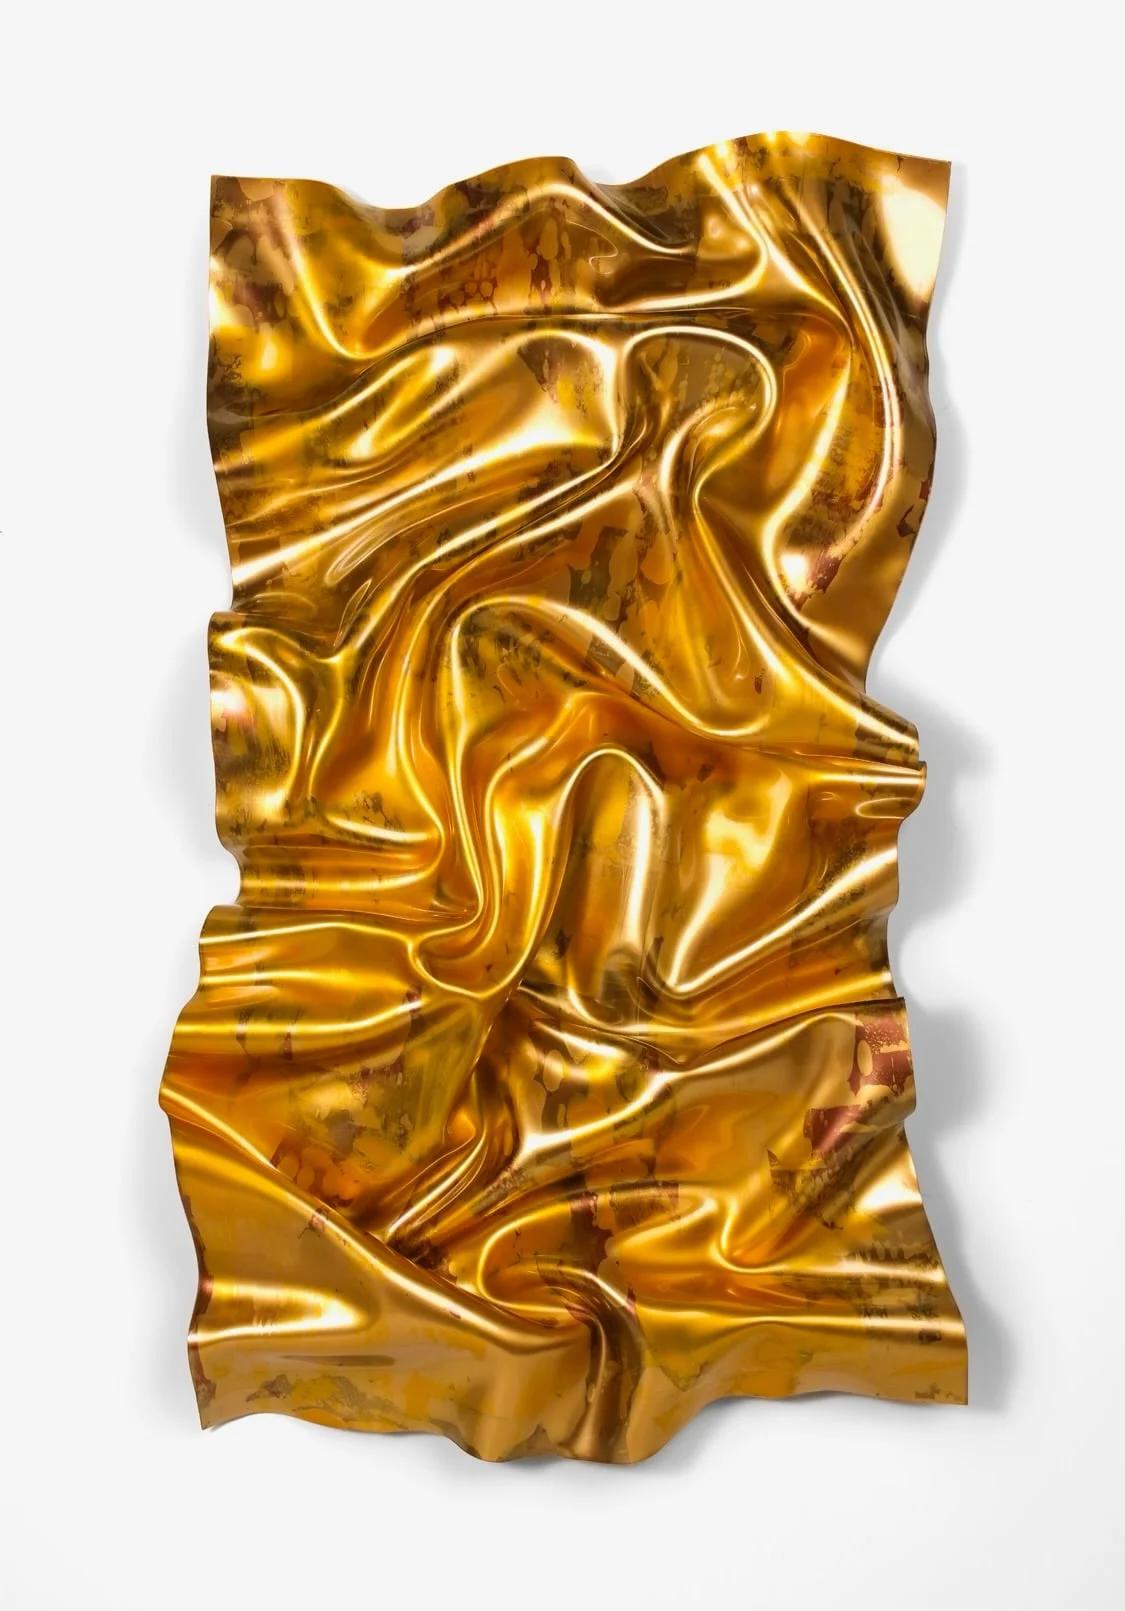 Goldrausch – Sculpture von Paul Rousso